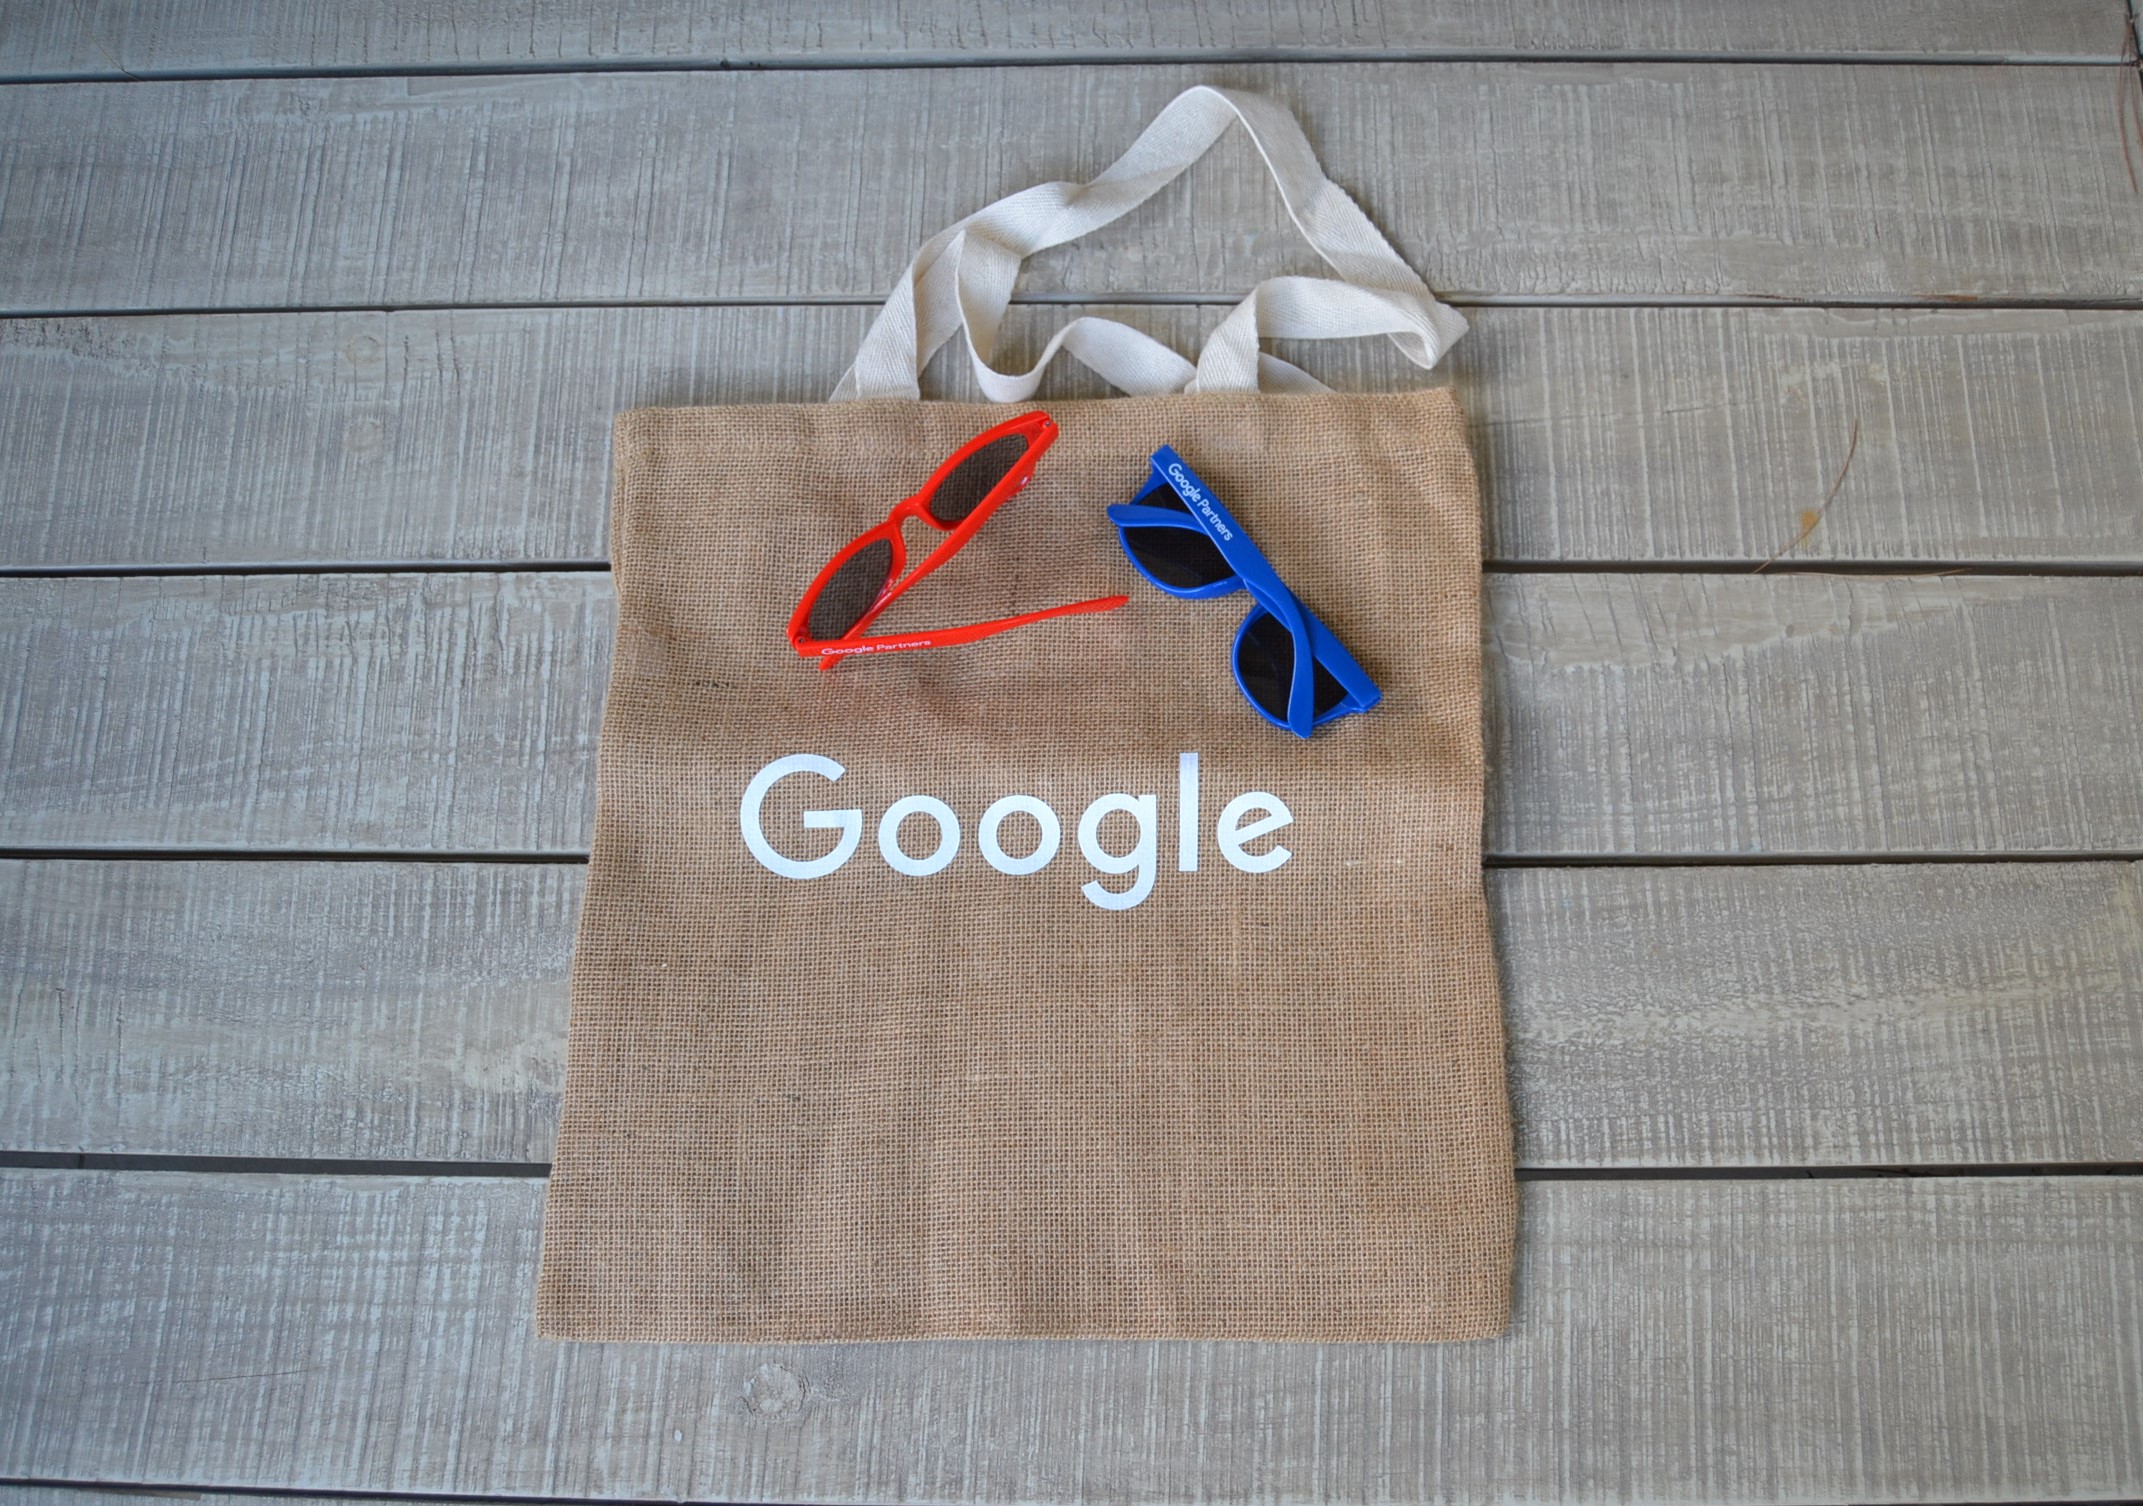 Google Cloud Canvas Tote Bag | eBay